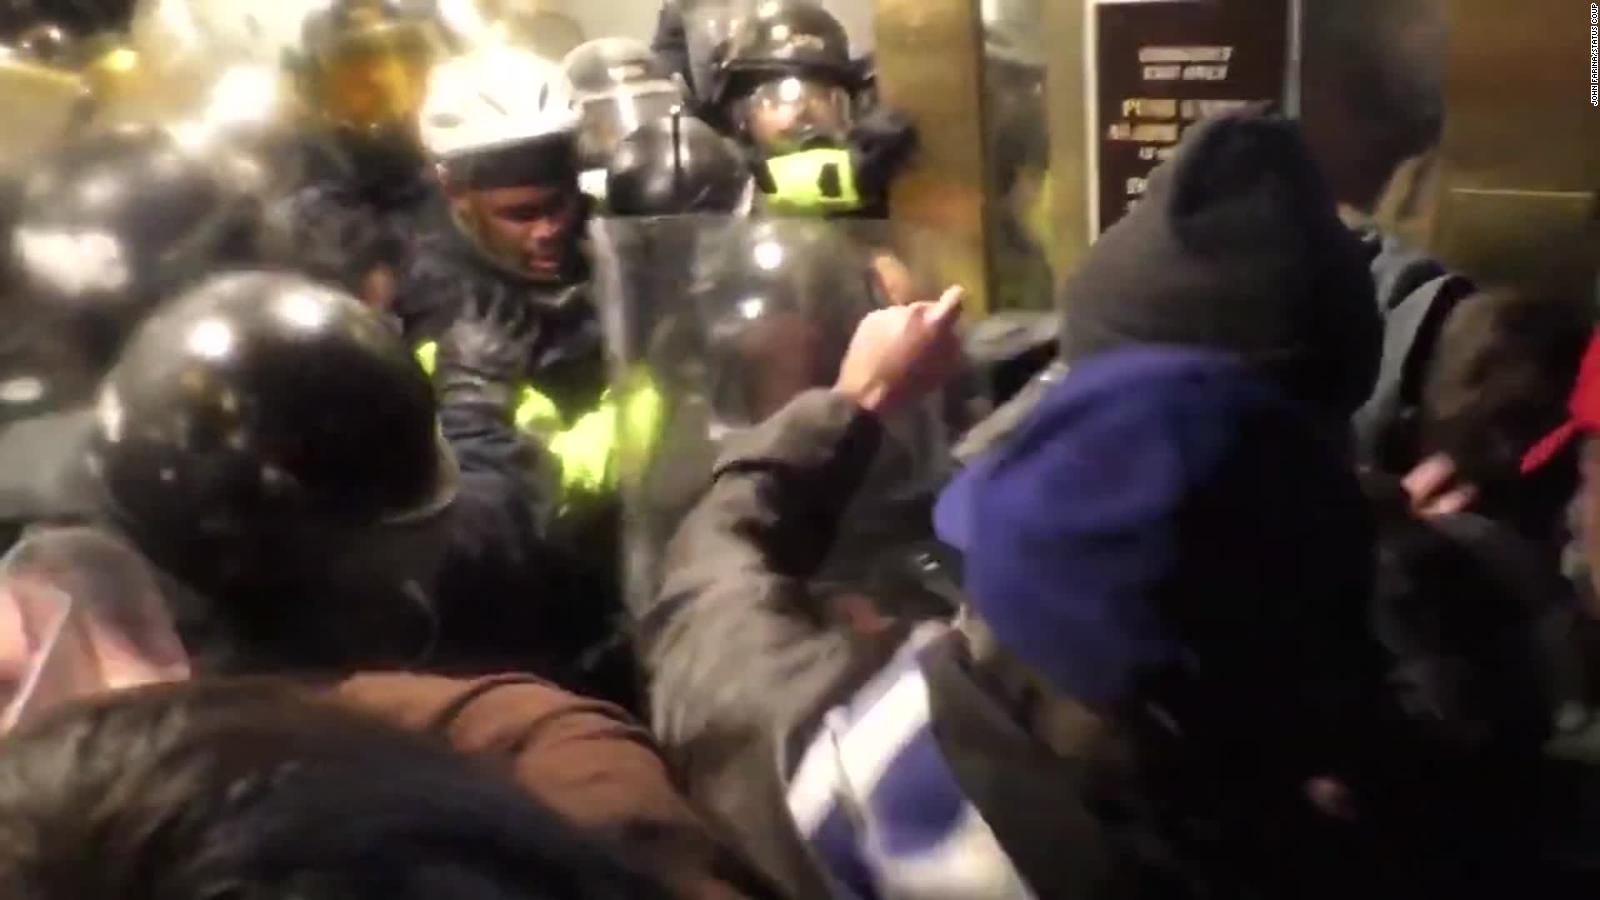 riot civil unrest police stuck